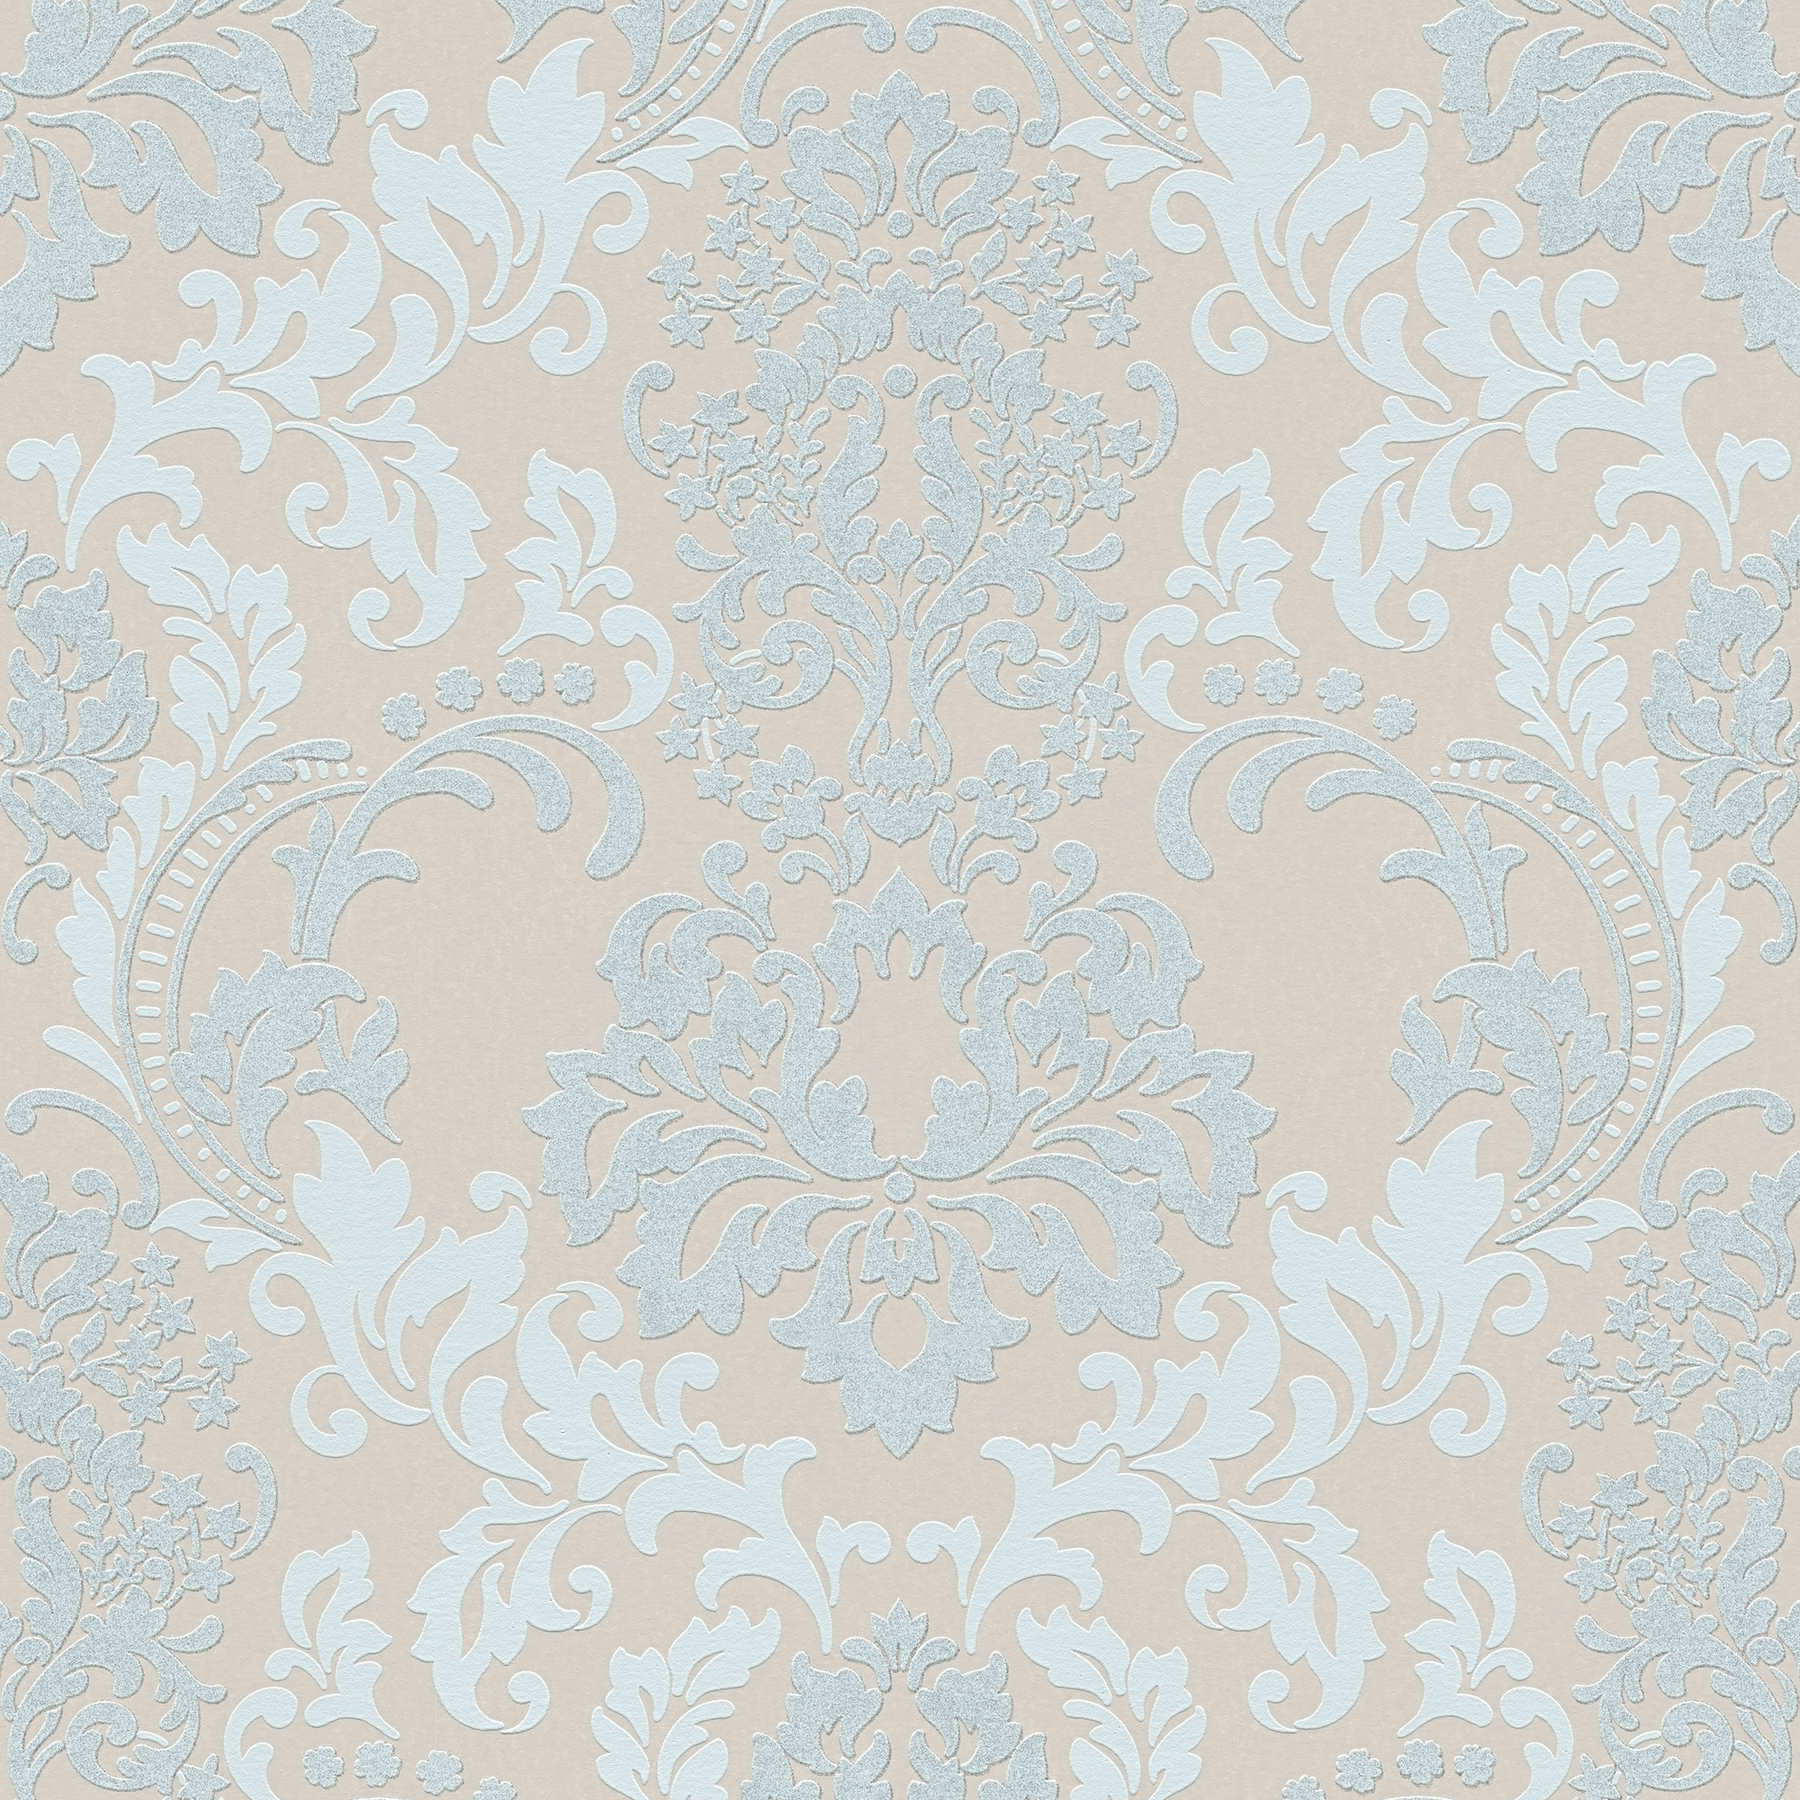 Baroque wallpaper with glitter effect - blue, beige
